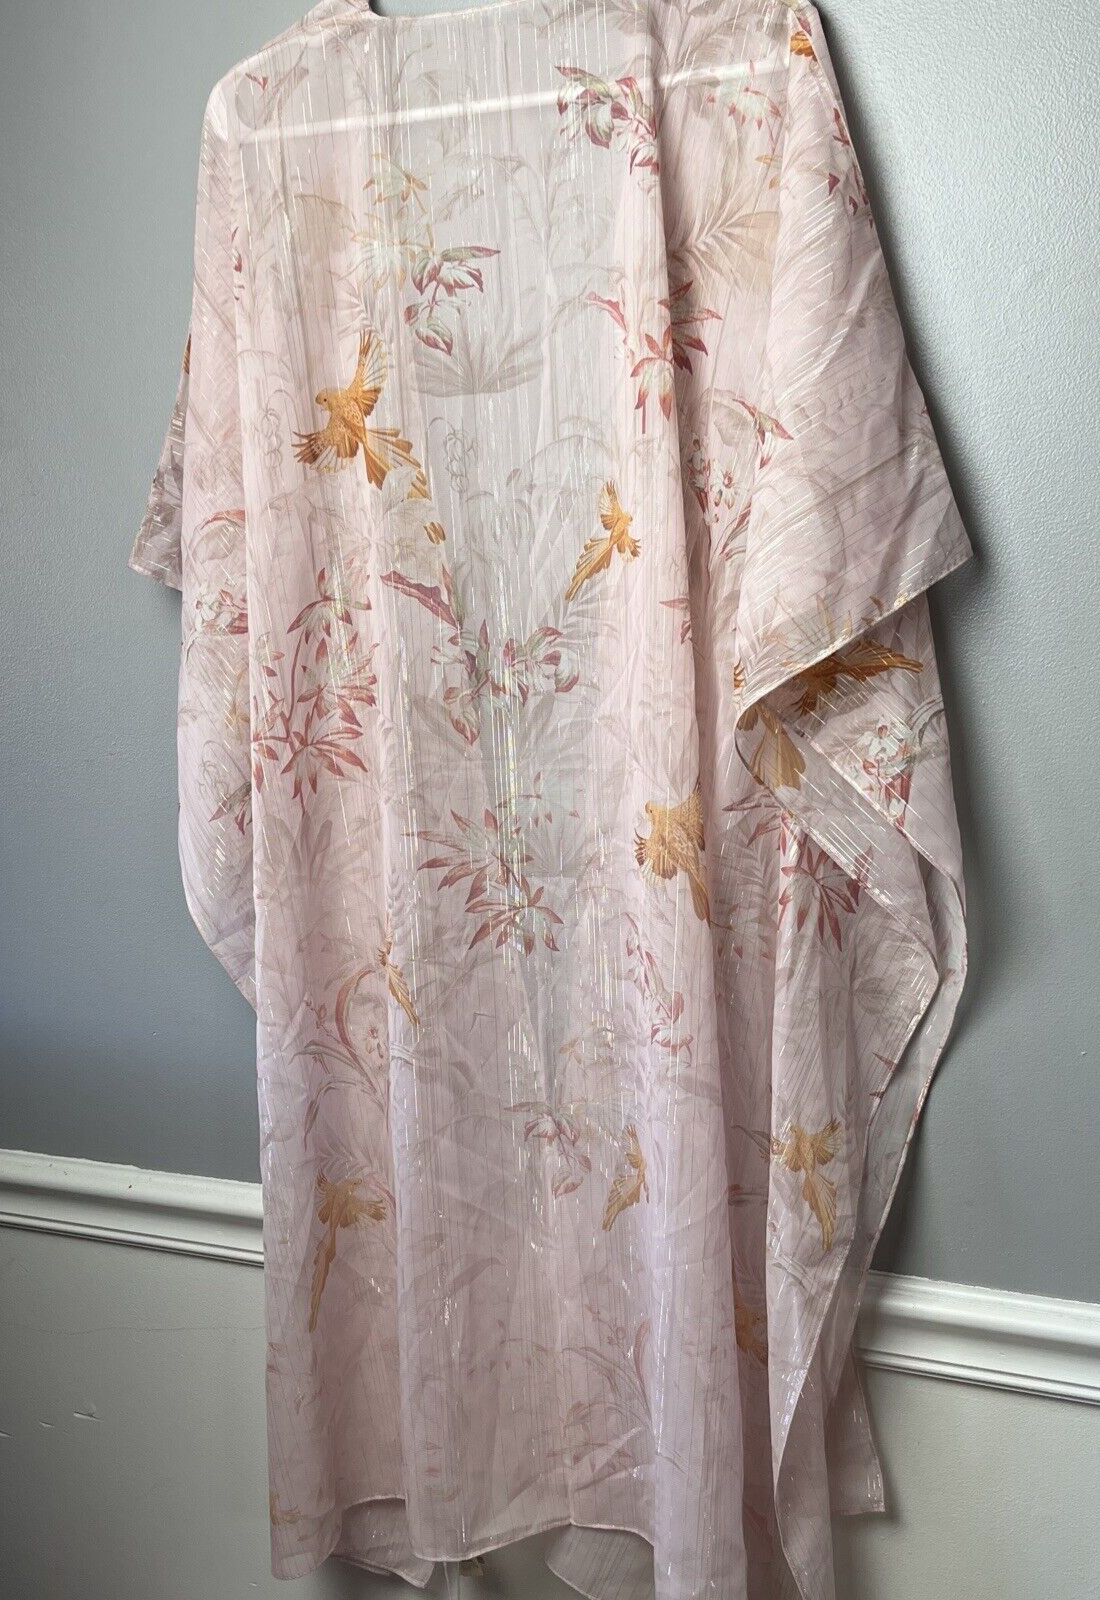 Ted Baker Rhapsody Kimono light pink bird print silver thread coverup NWT Sz 0/S